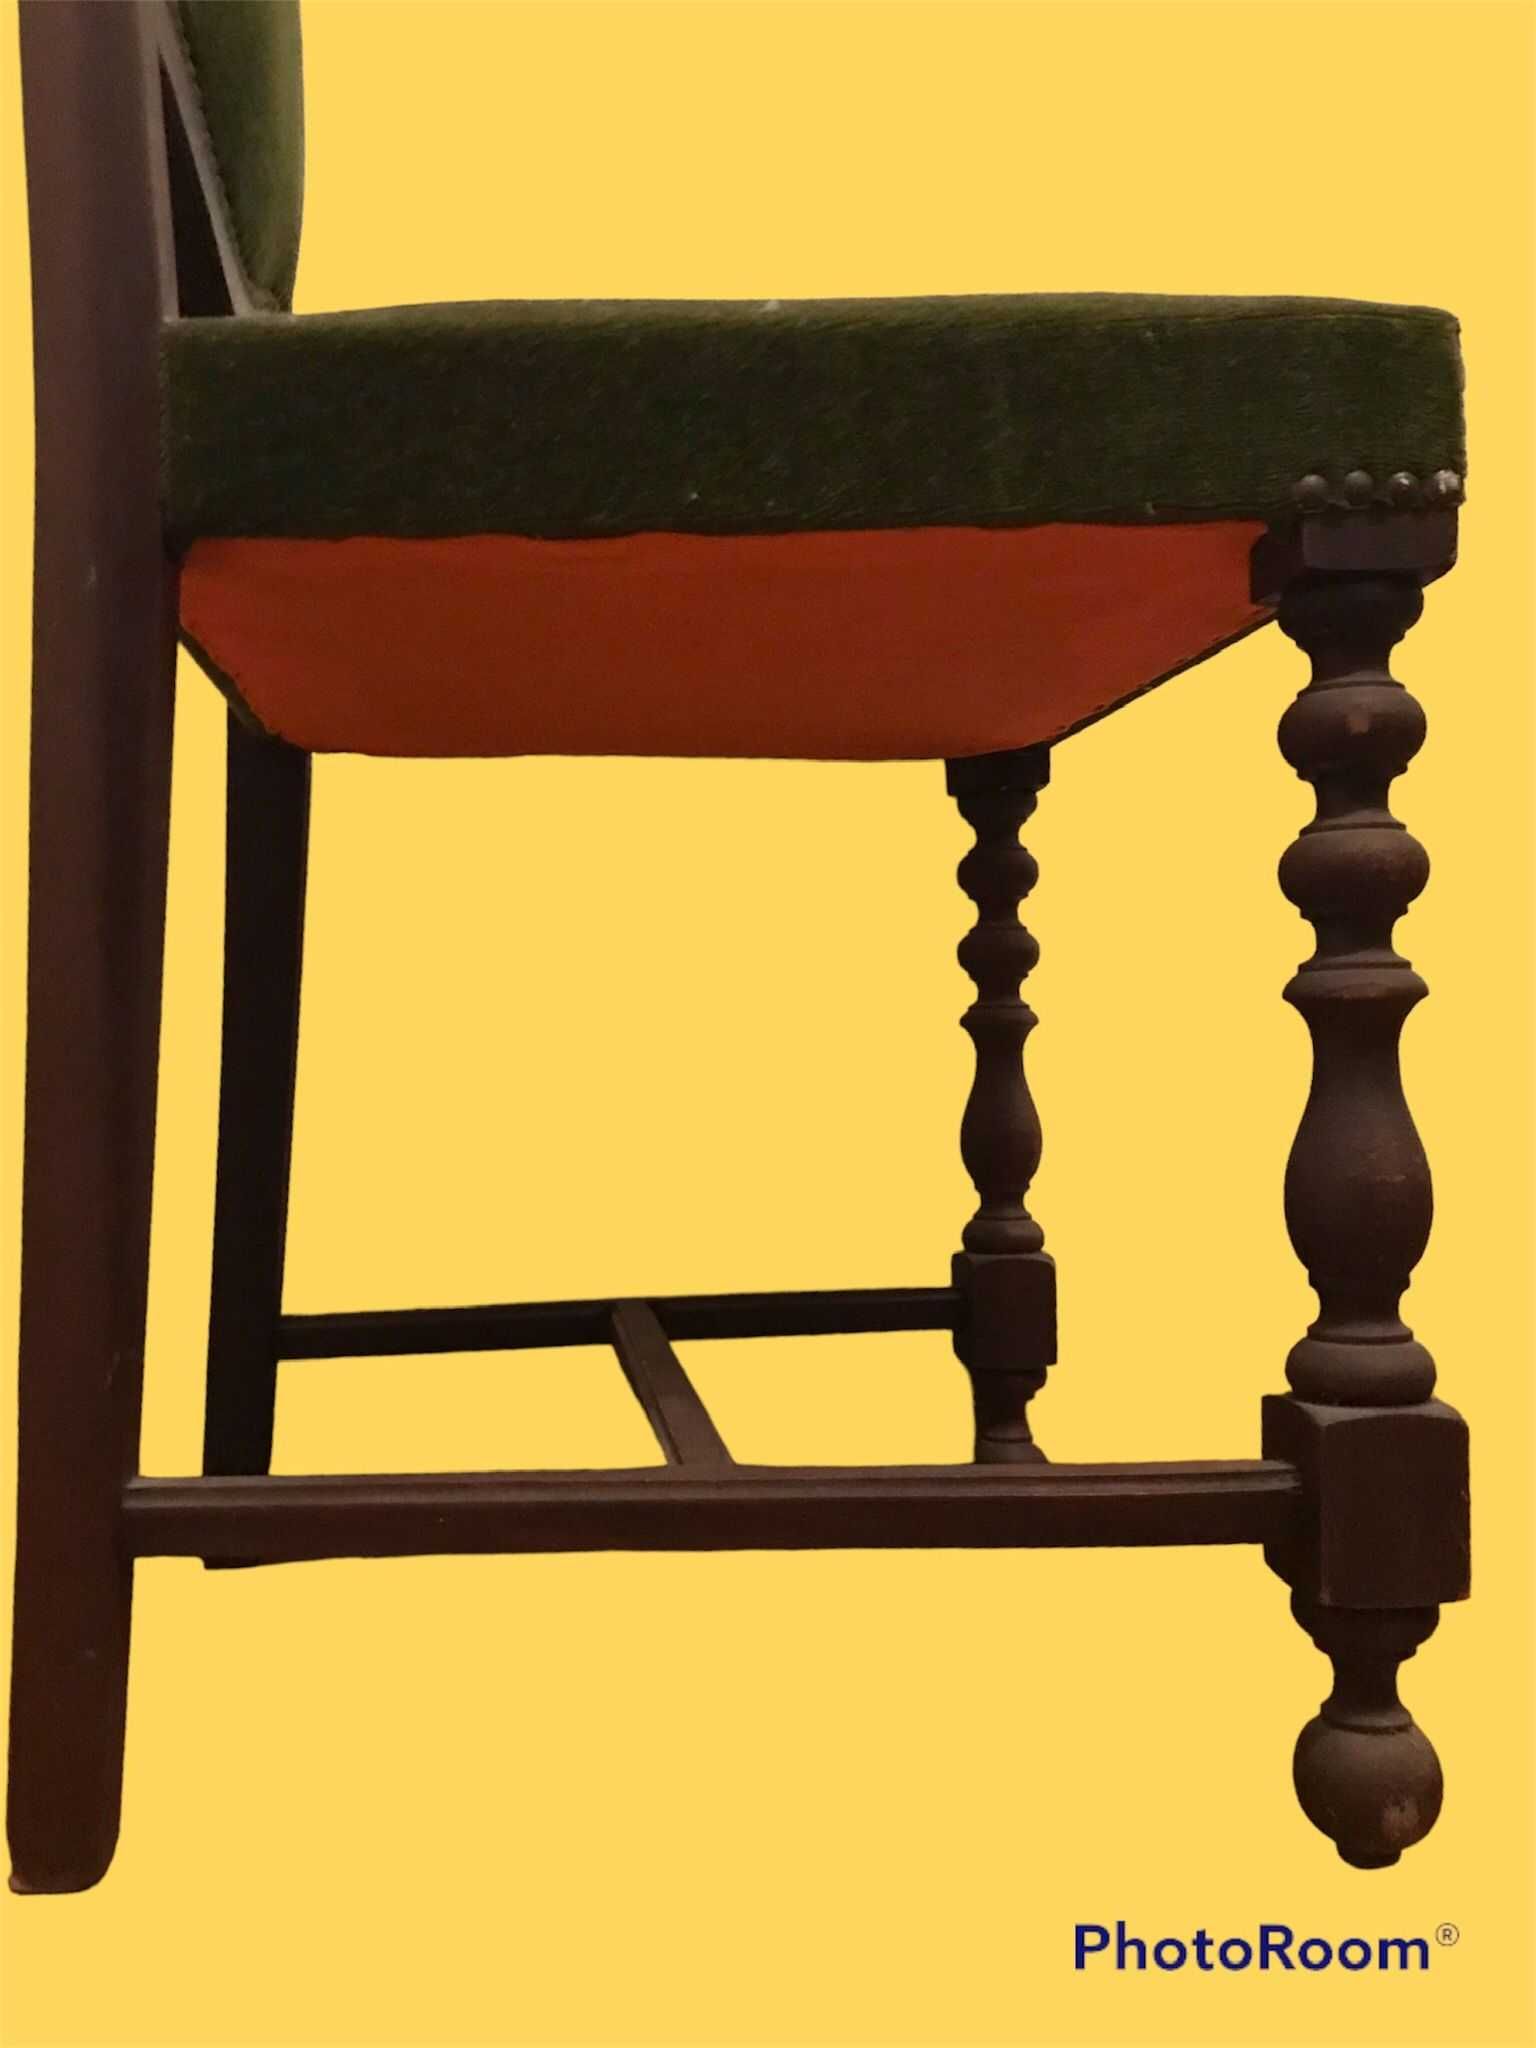 2 cadeiras de madeira antigas, vintage, forro verde, veludo